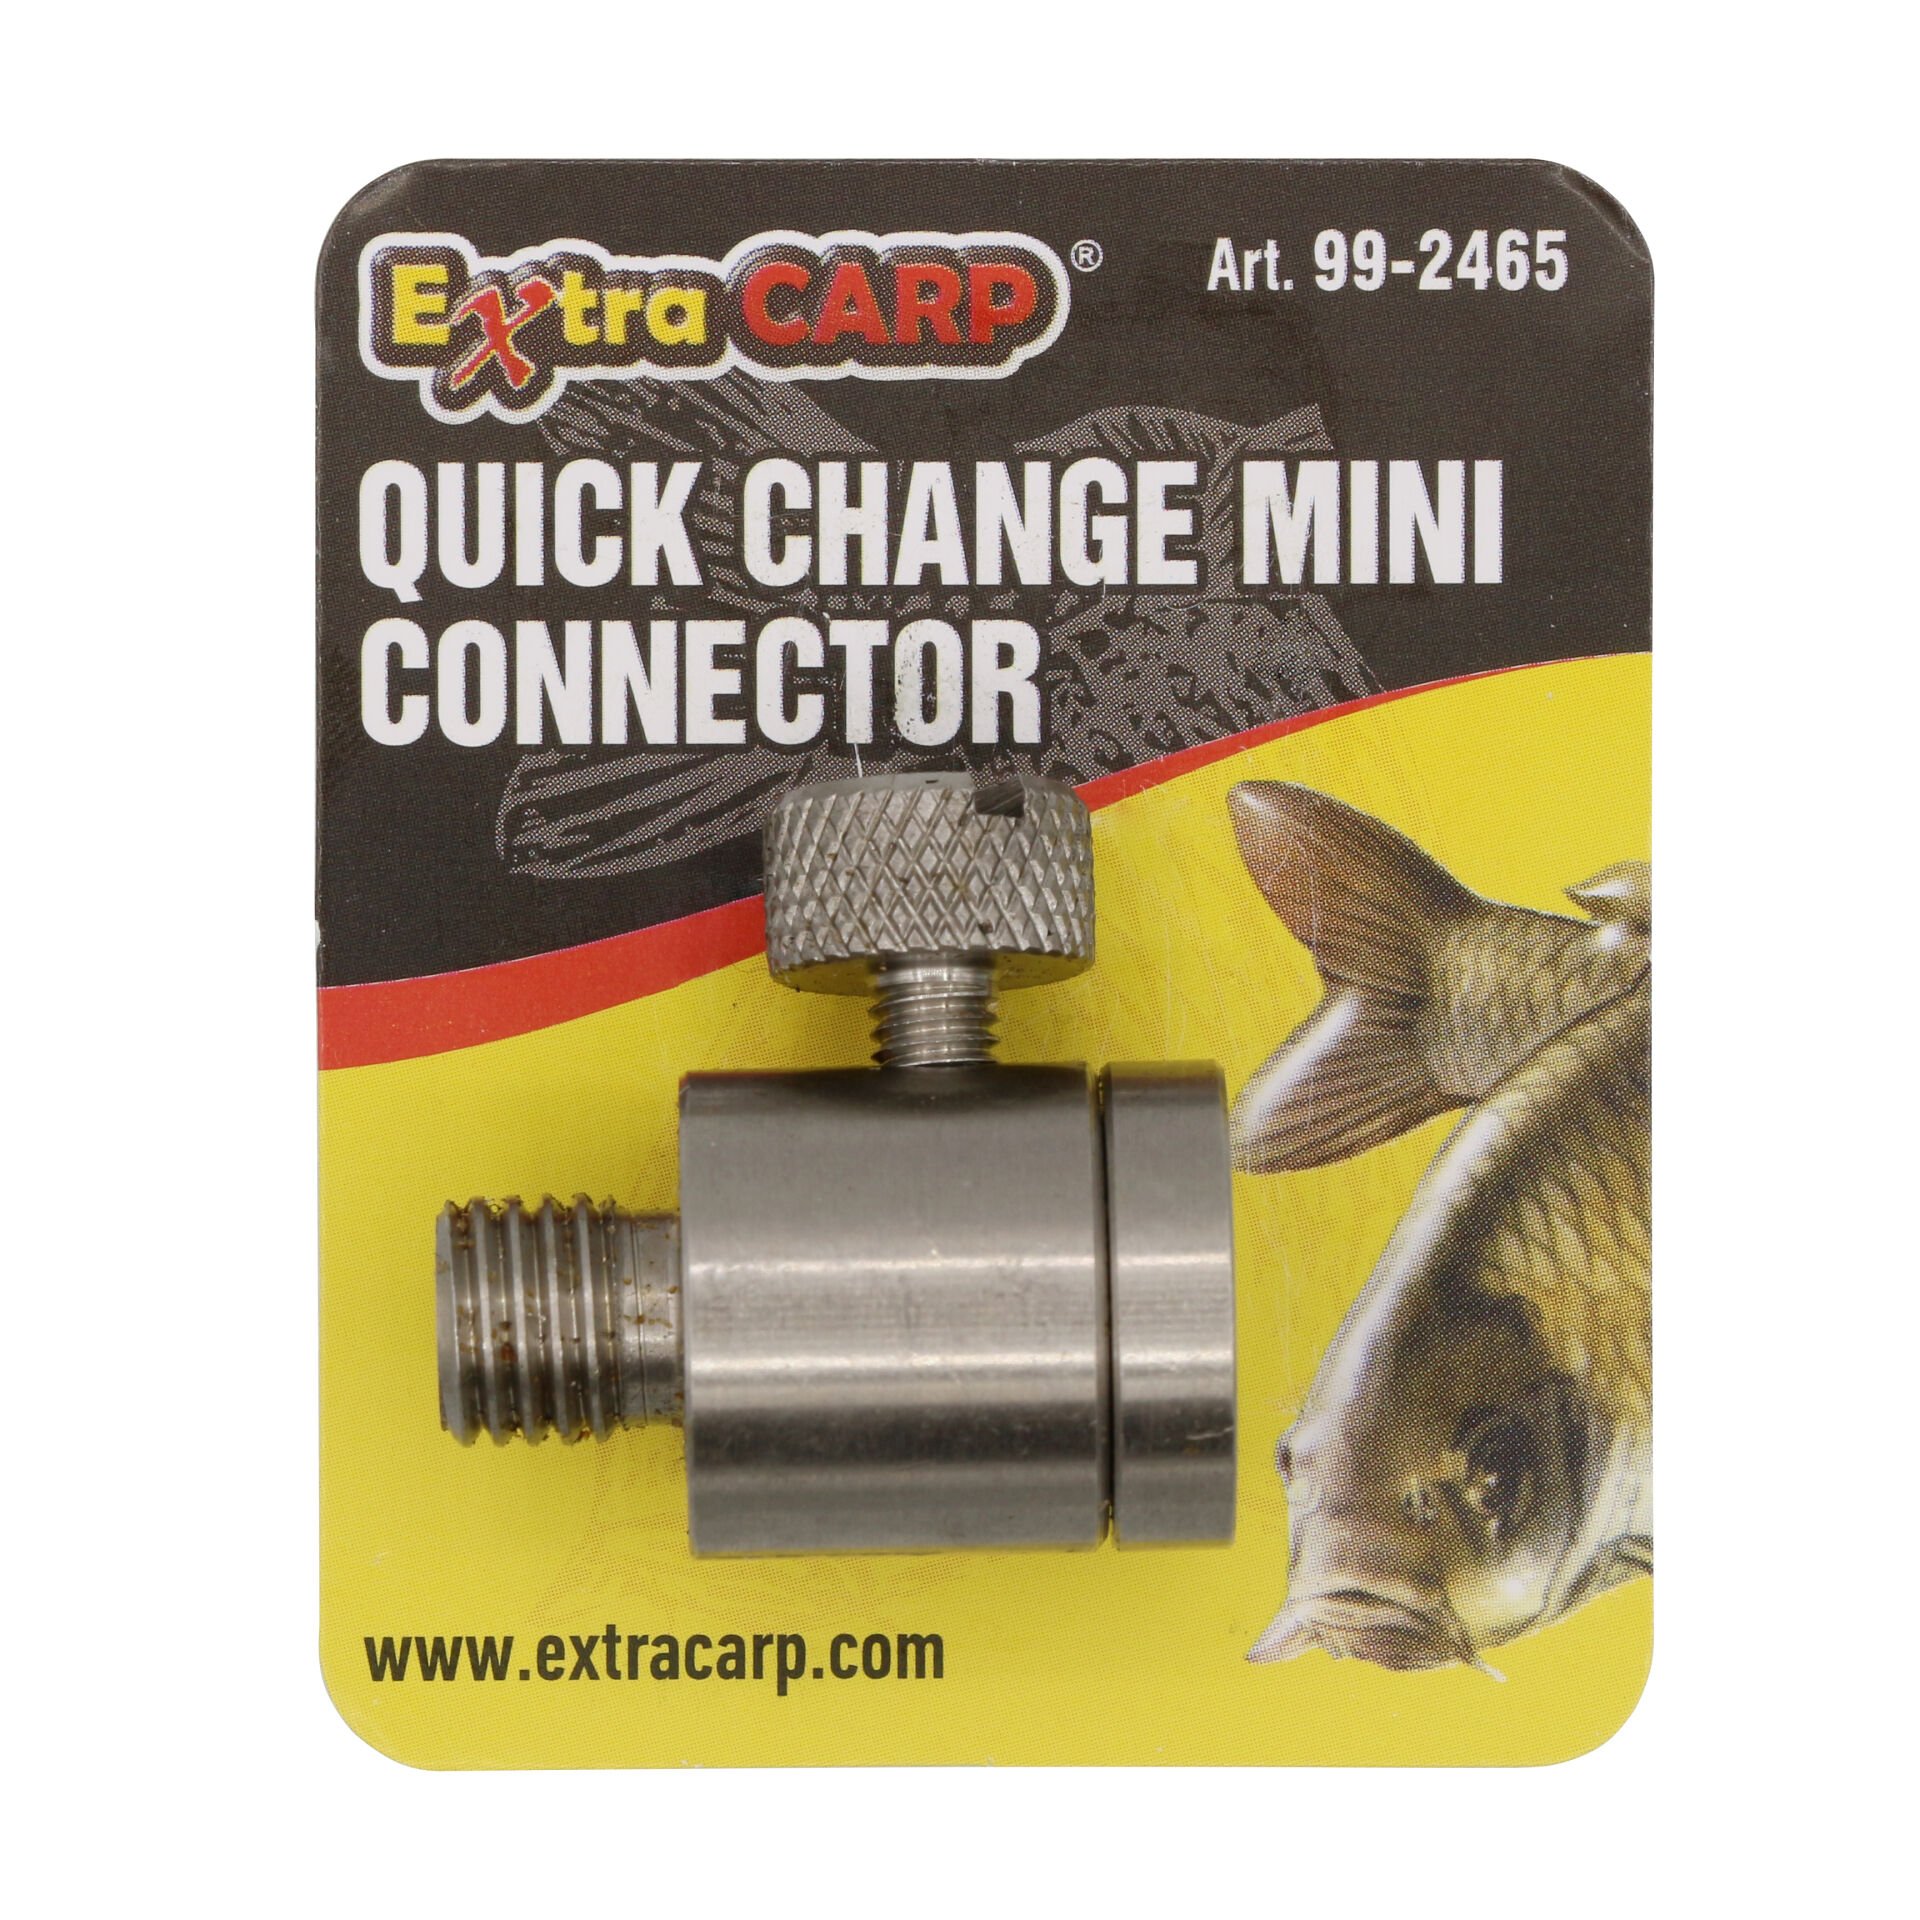 Quick Change Mini Connector